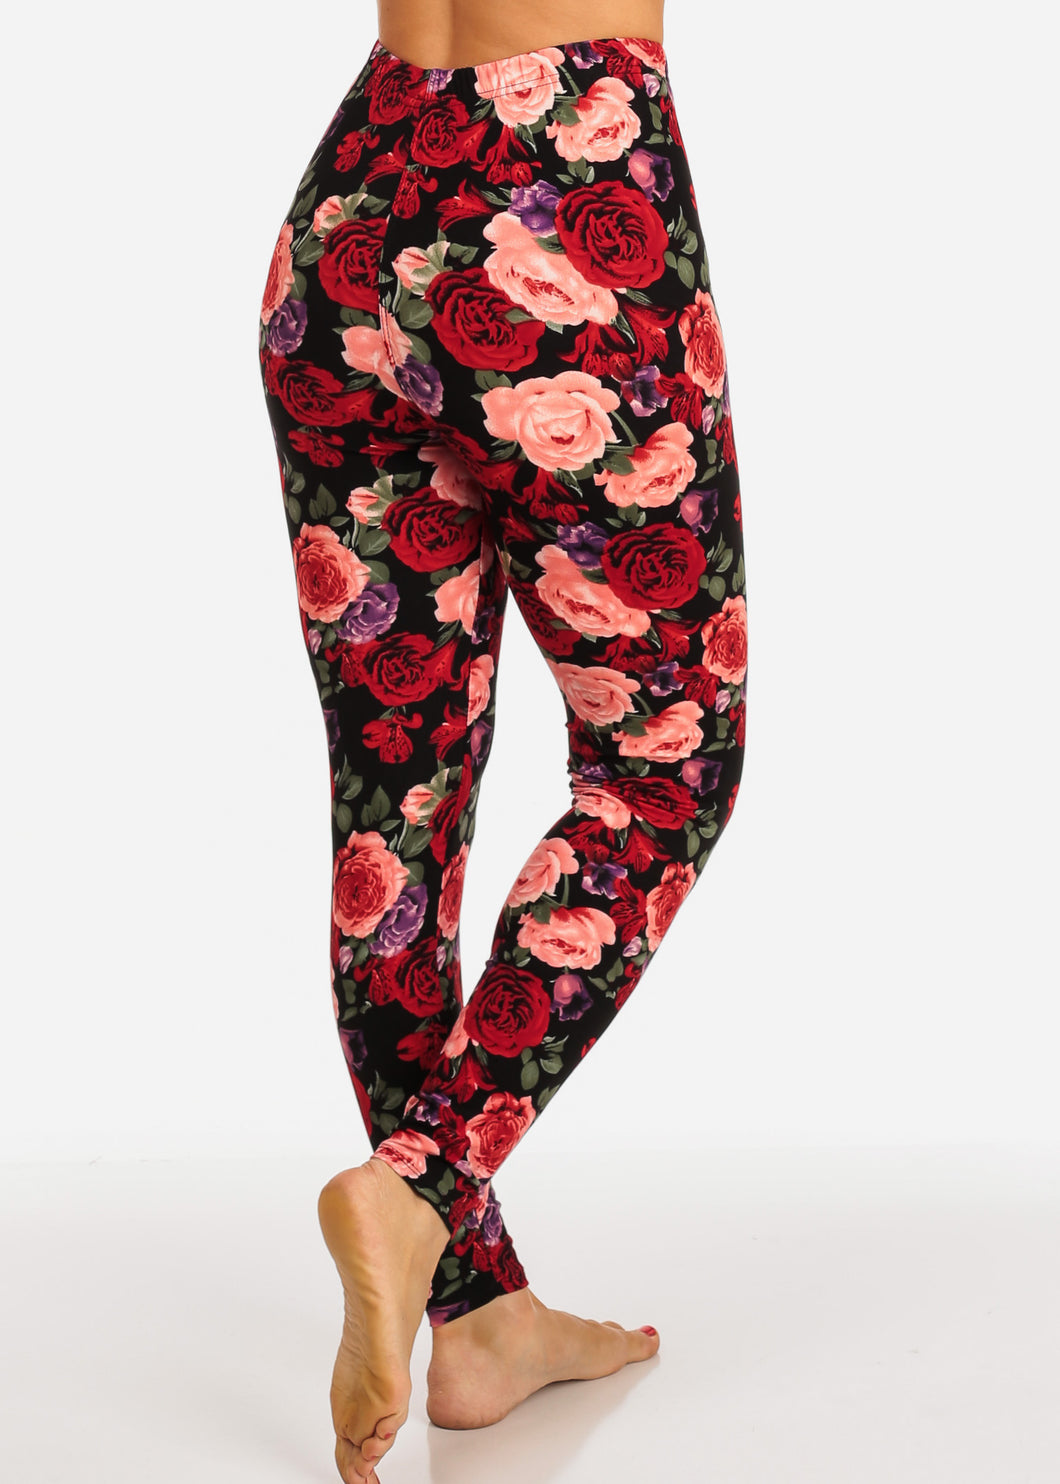 Red Rose Pattern Multi Color Women's Leggings Skinny Leg Pants N226 – One  Size Fits